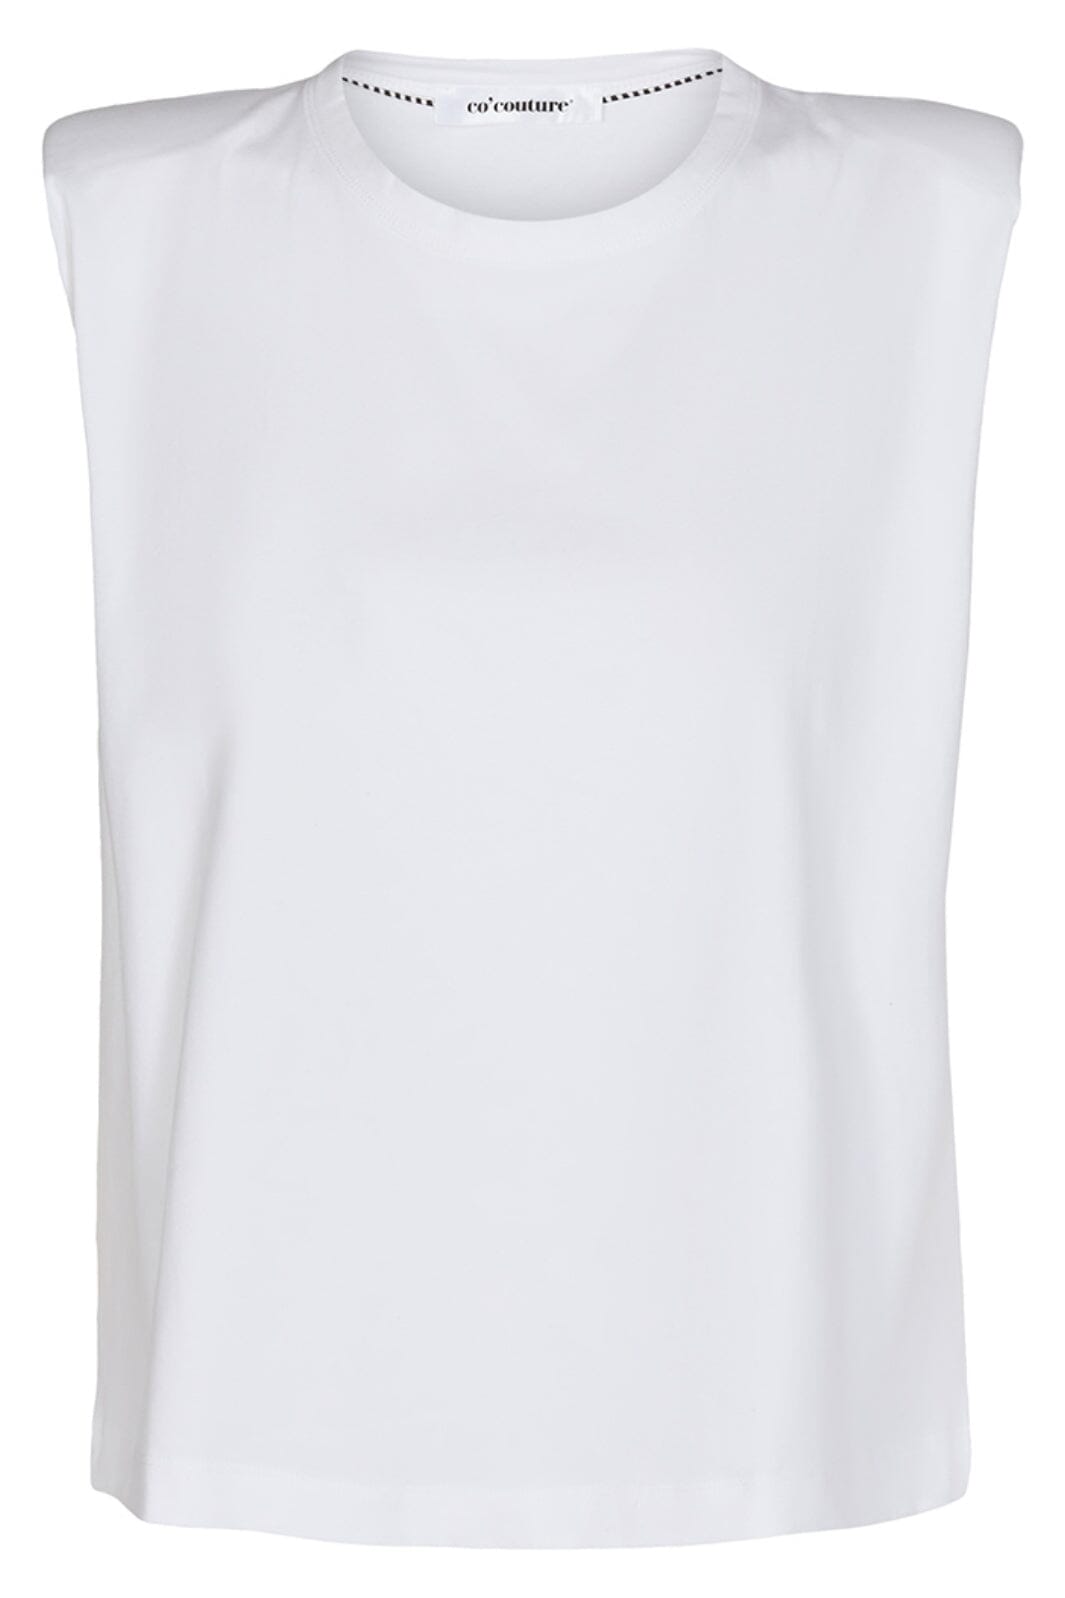 Co´couture - Eduardacc Tee 93050 - 4000 White T-shirts 